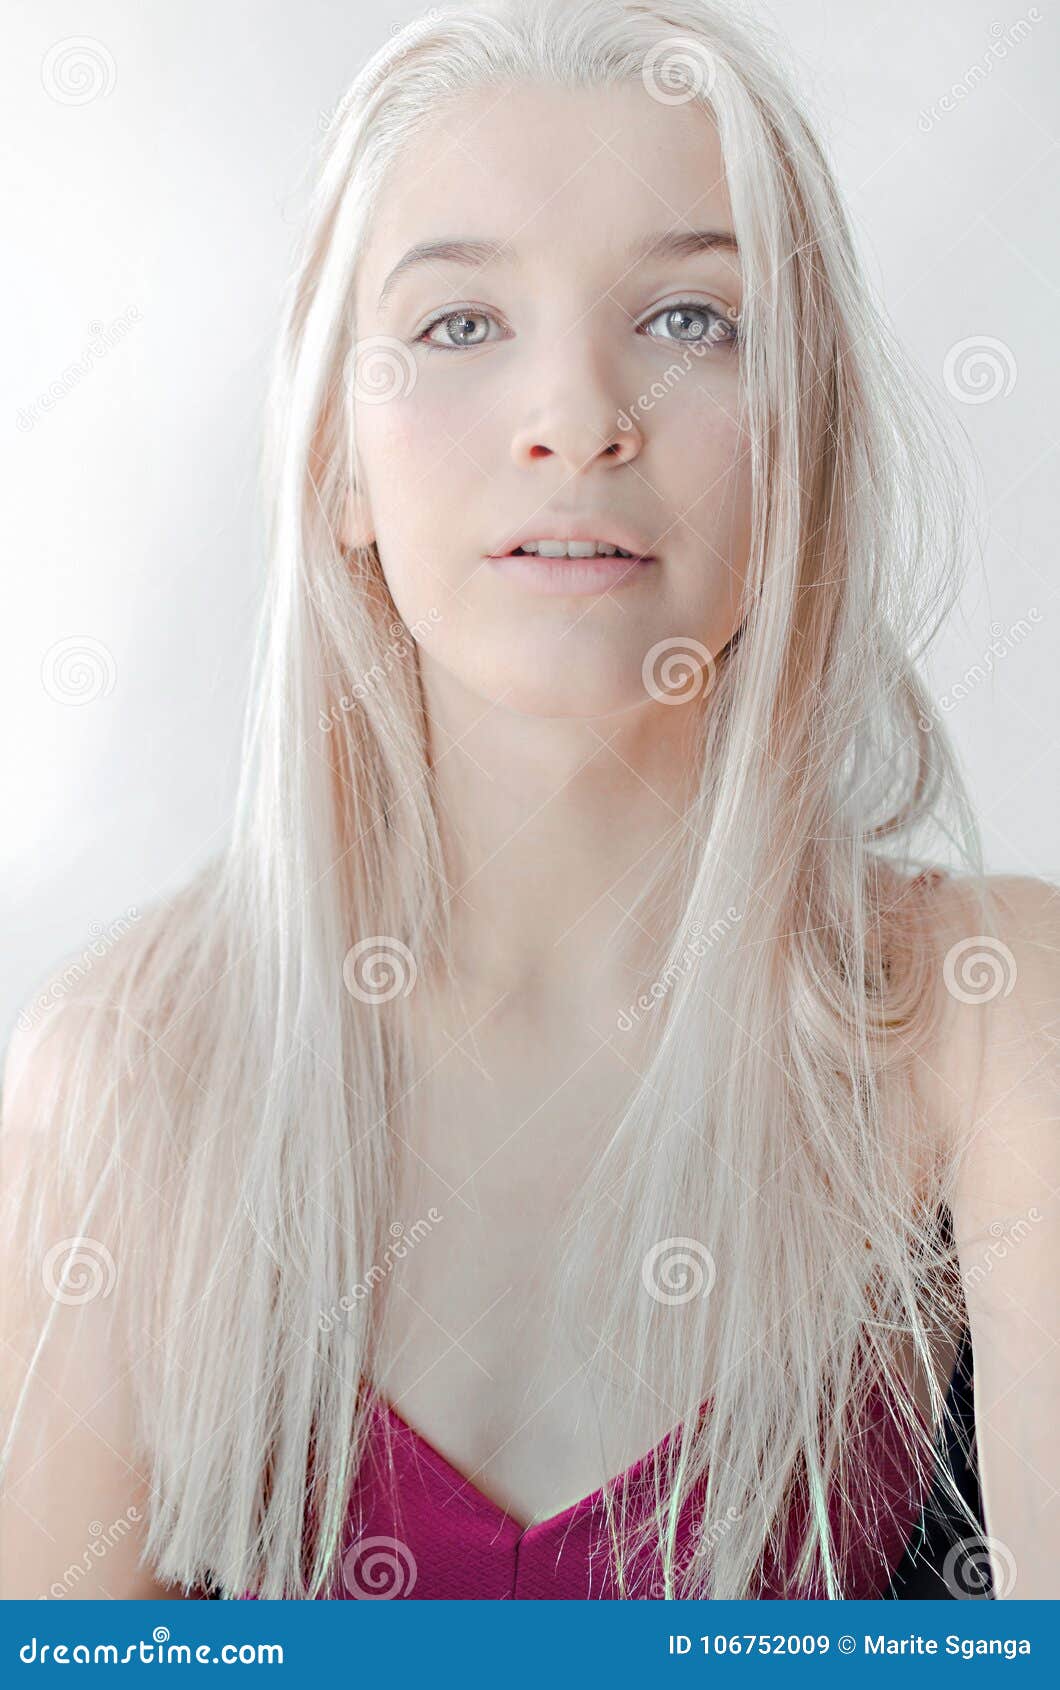 Beautiful Green Eyed Blonde Looking At Camera Stock Image Image Of